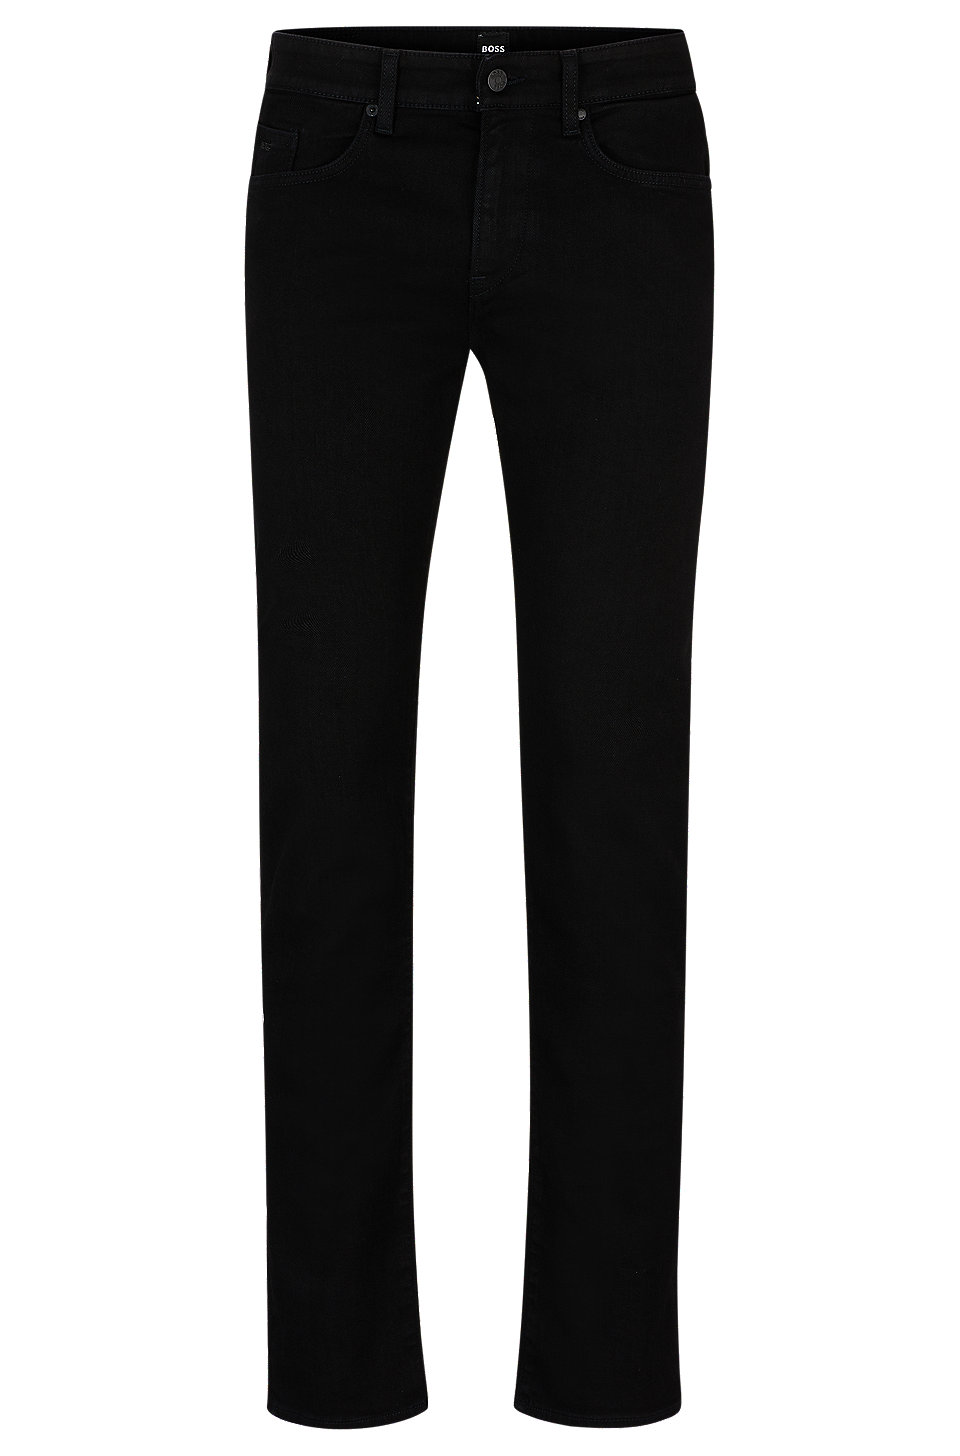 BOSS - Slim-fit jeans in black super-soft Italian denim